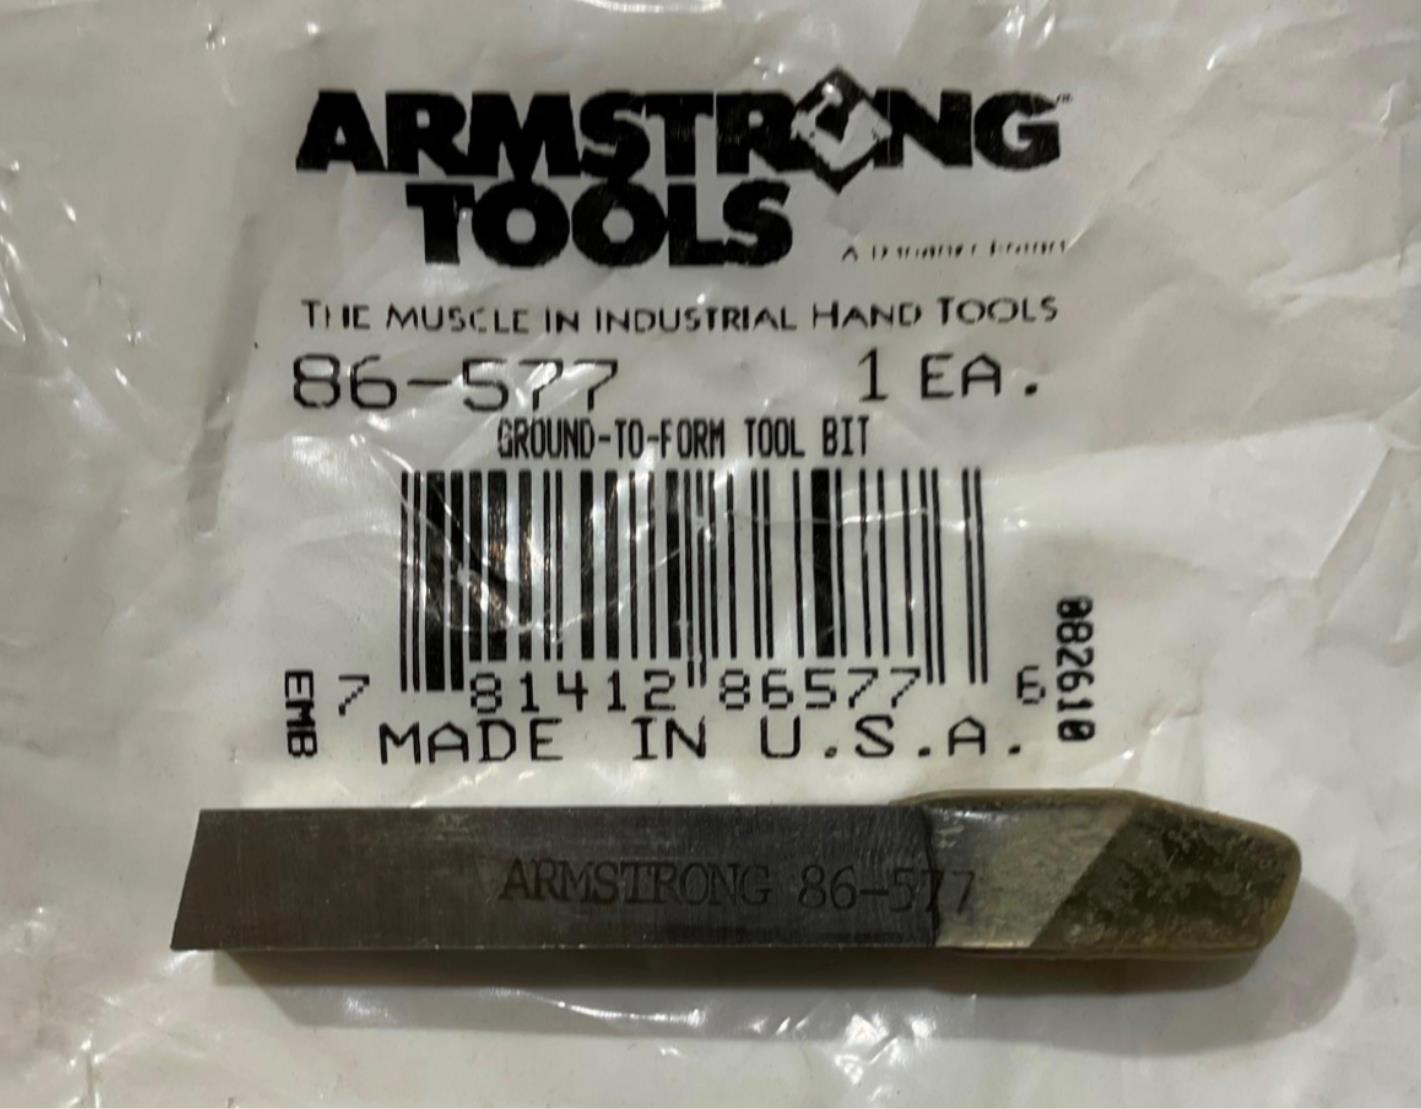 Armstrong 86-577 Ground-to-form Tool Bit USA